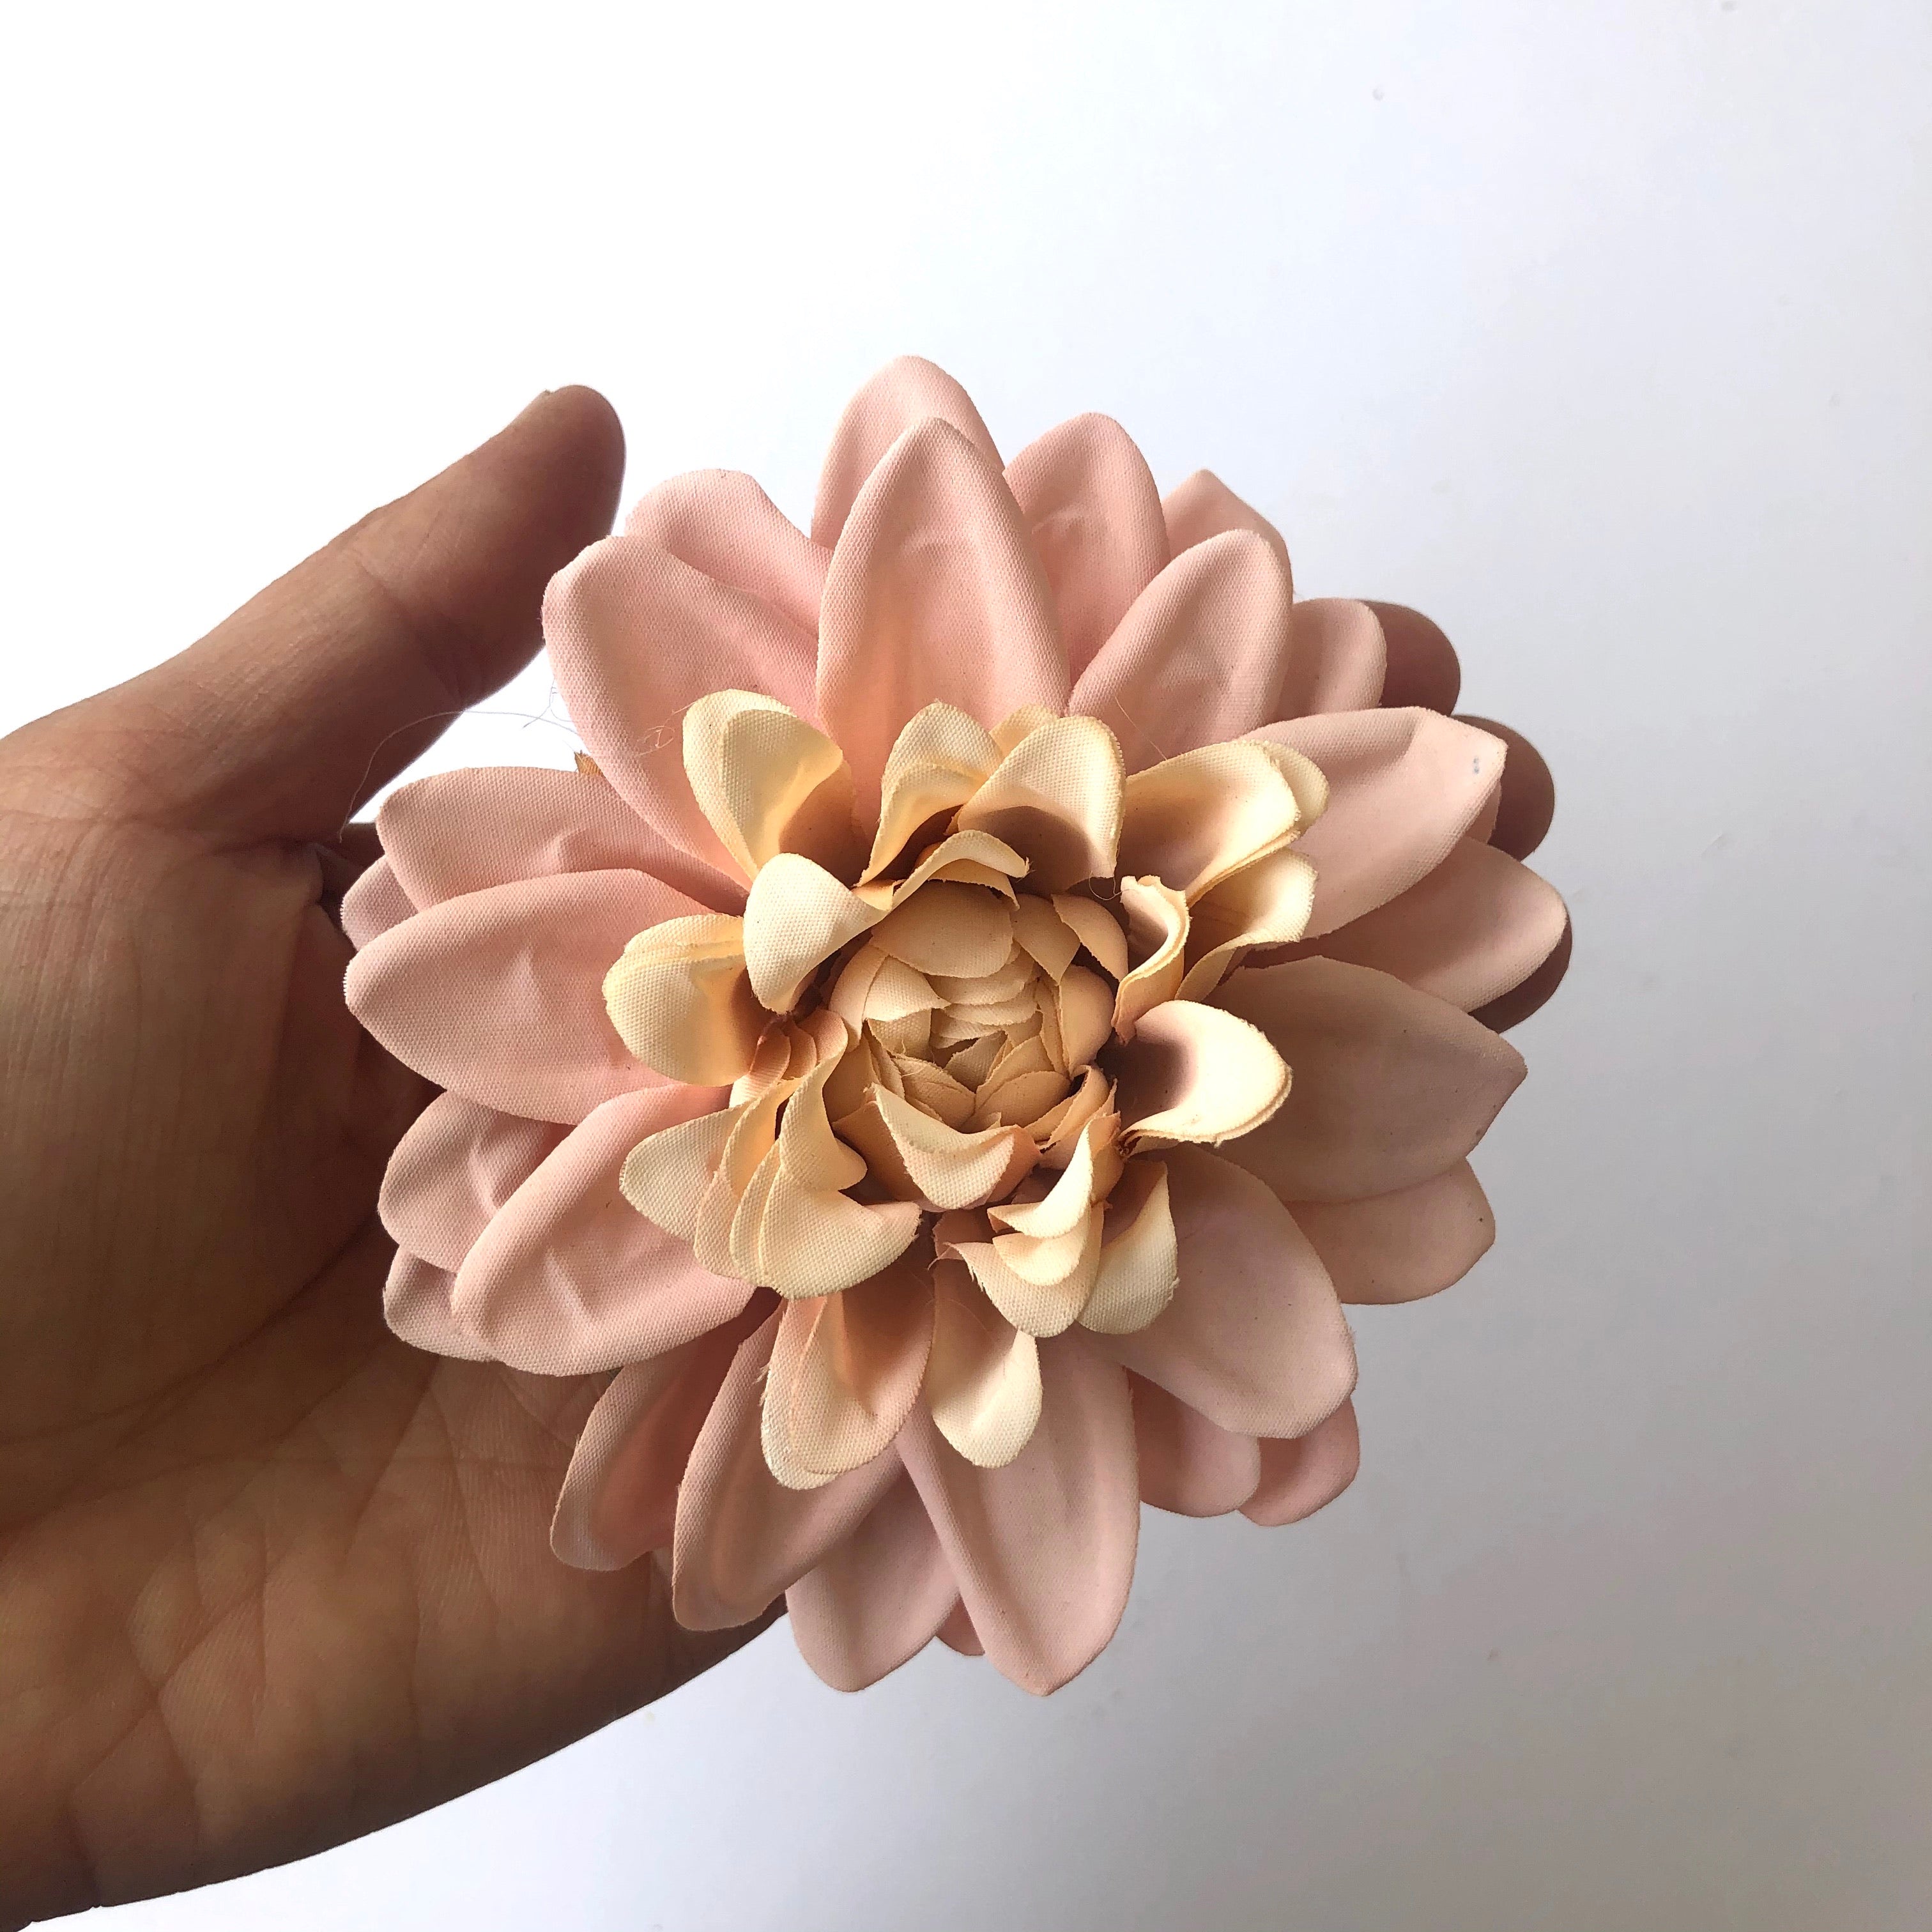 Artificial Silk Flower Heads - Vintage Pink Chrysanthemum Style 14 - 1pc